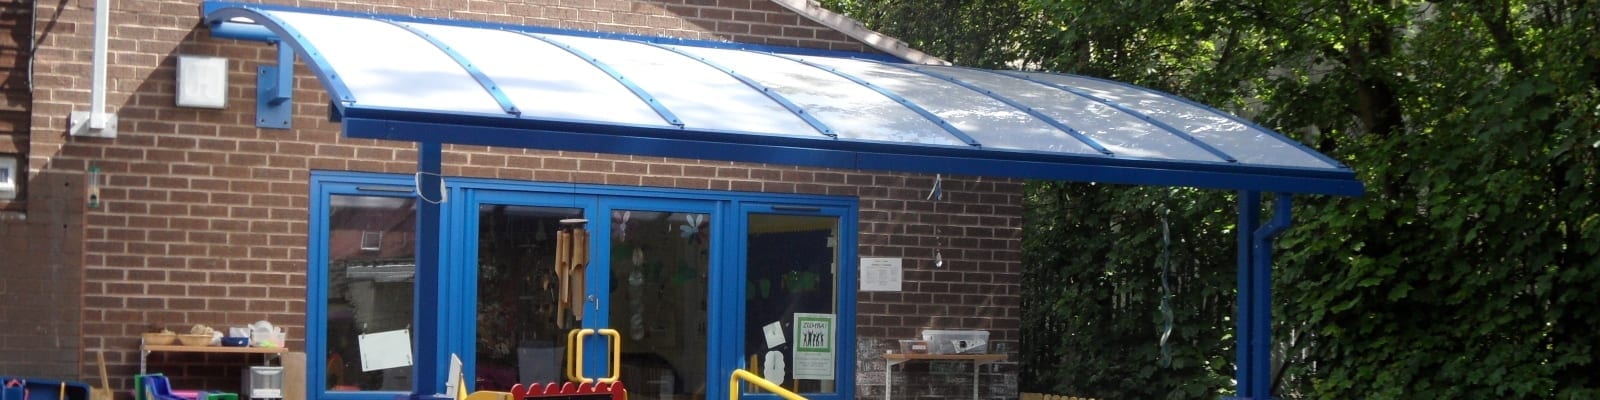 Osborne Primary School Blue Canopy